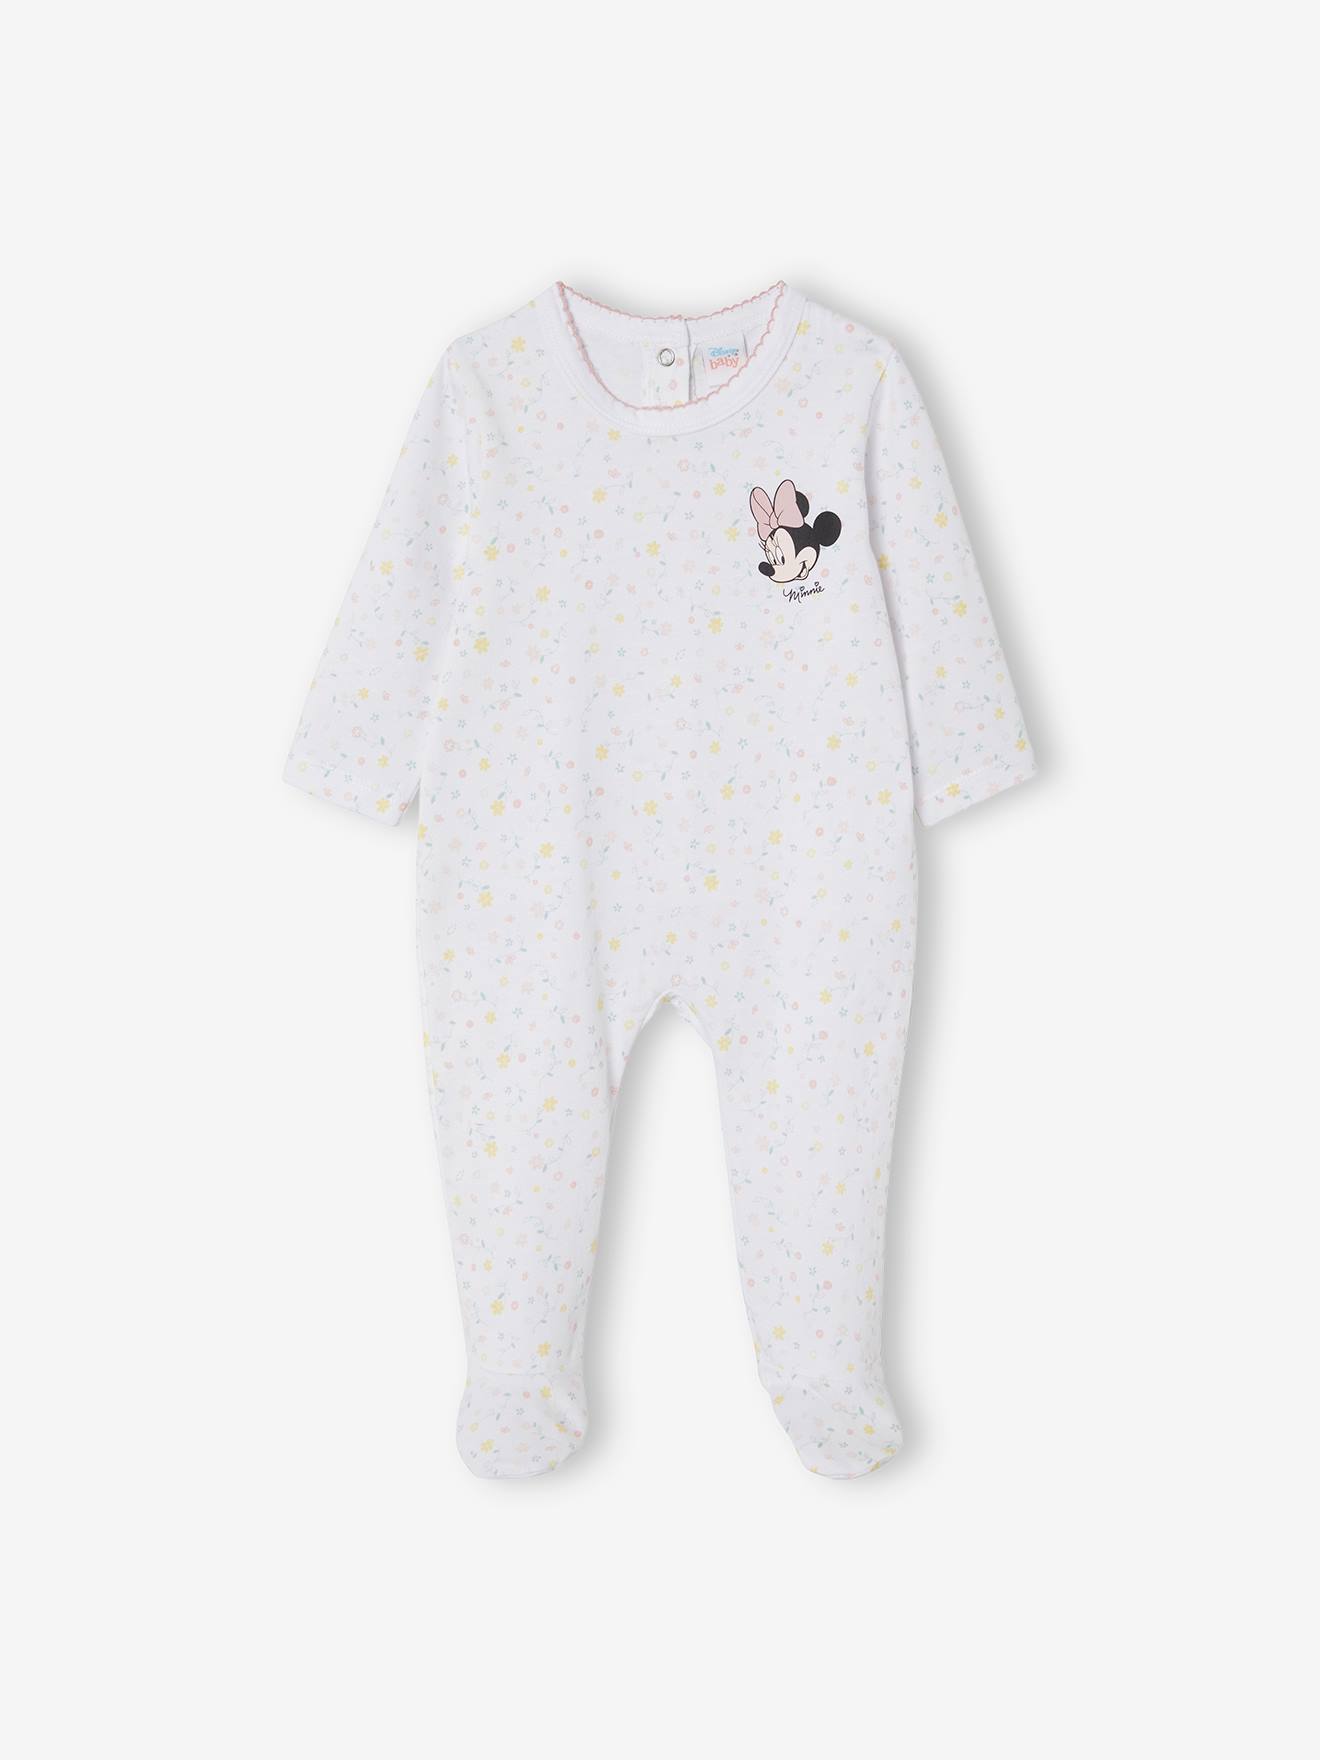 Baby Girls Sleepsuit Pyjamas All Inn One With Hood Disney Minnie Mouse 